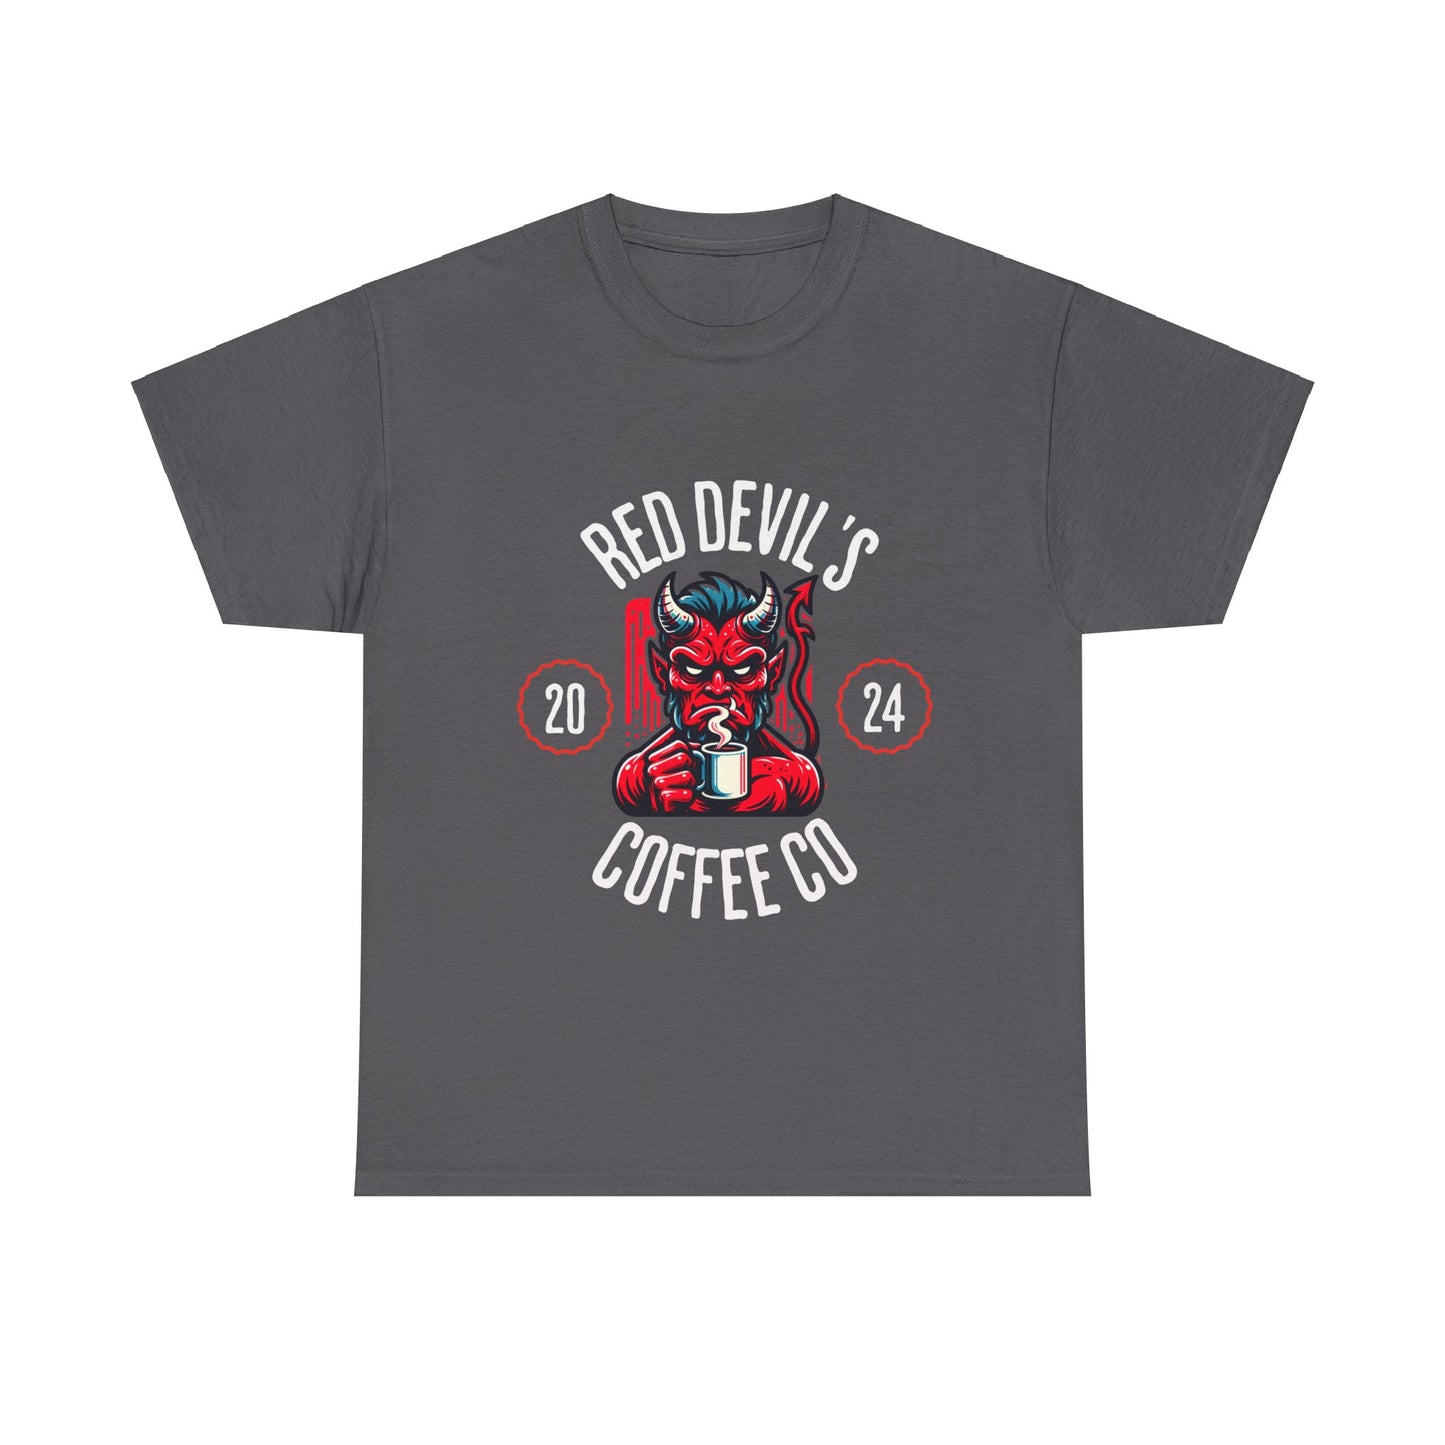 Red Devil Coffee TShirt Dad Gift Grumpy Morning Tee Cotton